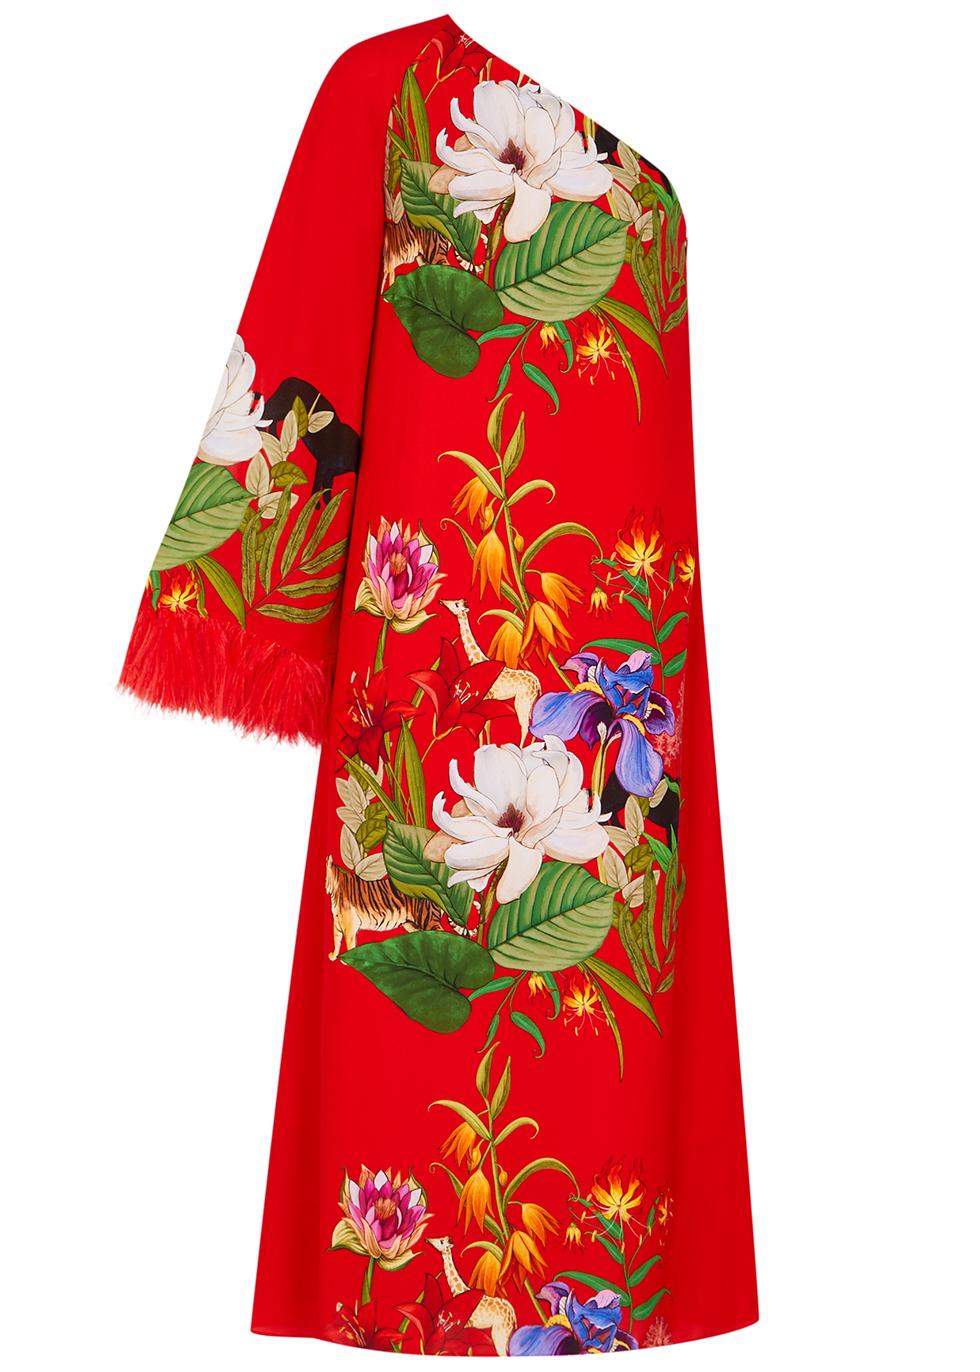 Aubrey one-shoulder floral-print dress by BORGO DE NOR